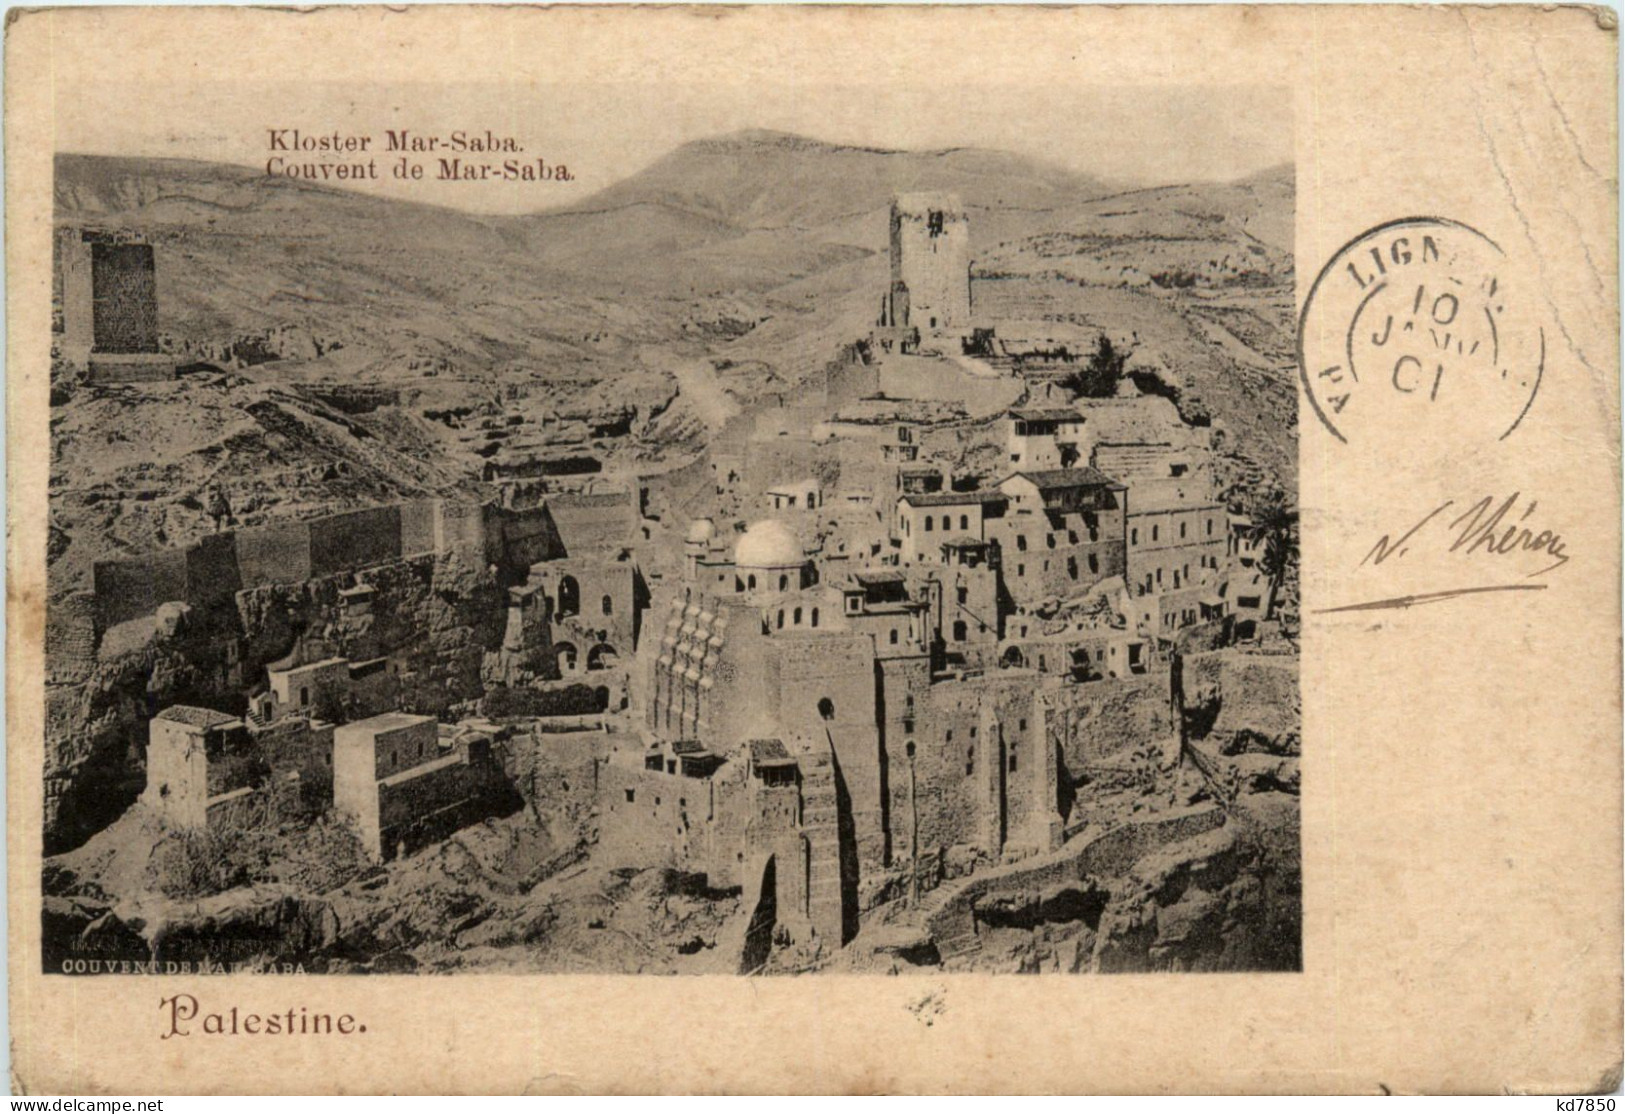 Kloster Mar-Saba - Palästina